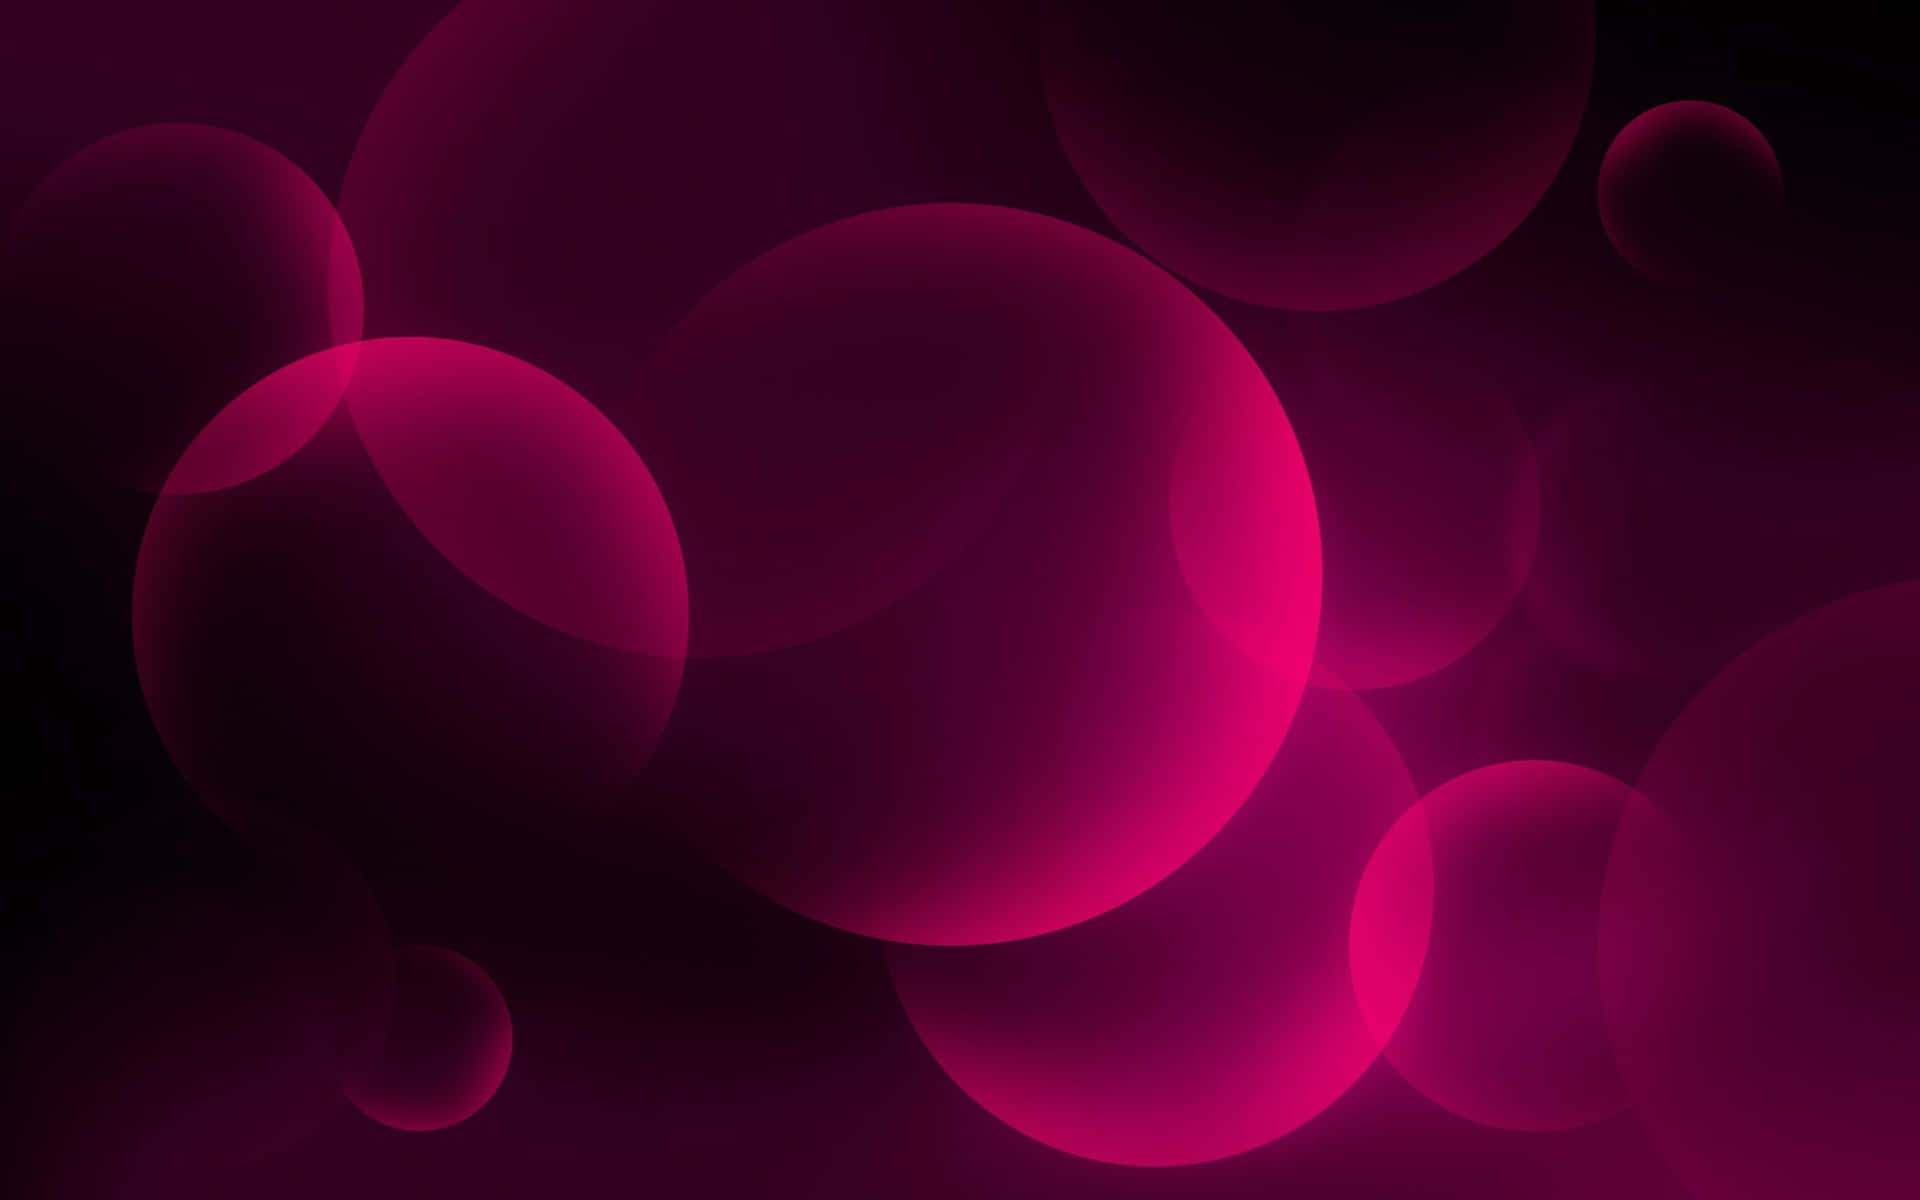 A vivid dark pink abstract background